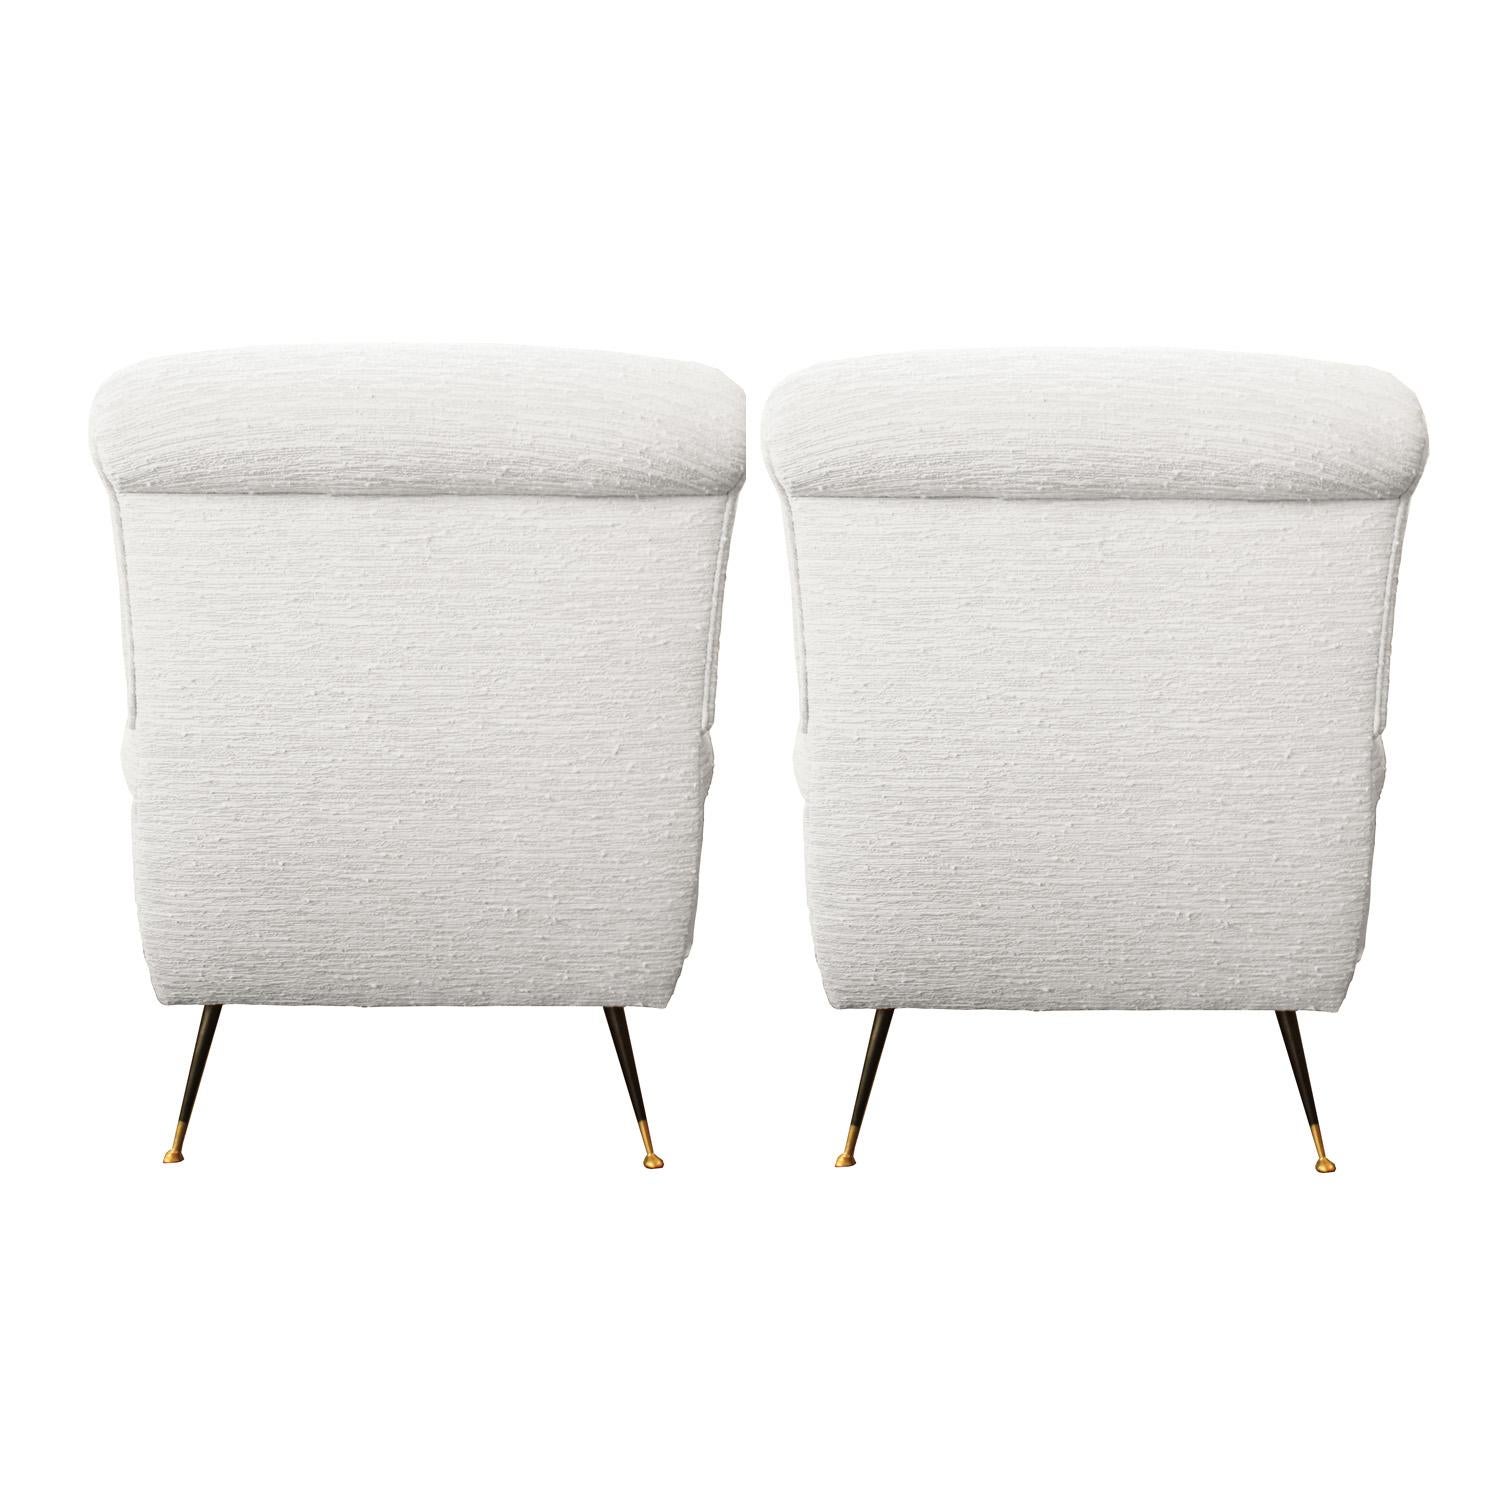 Mid-20th Century Chic Pair of Italian Mid-Century Modern Lounge Chairs 1950s